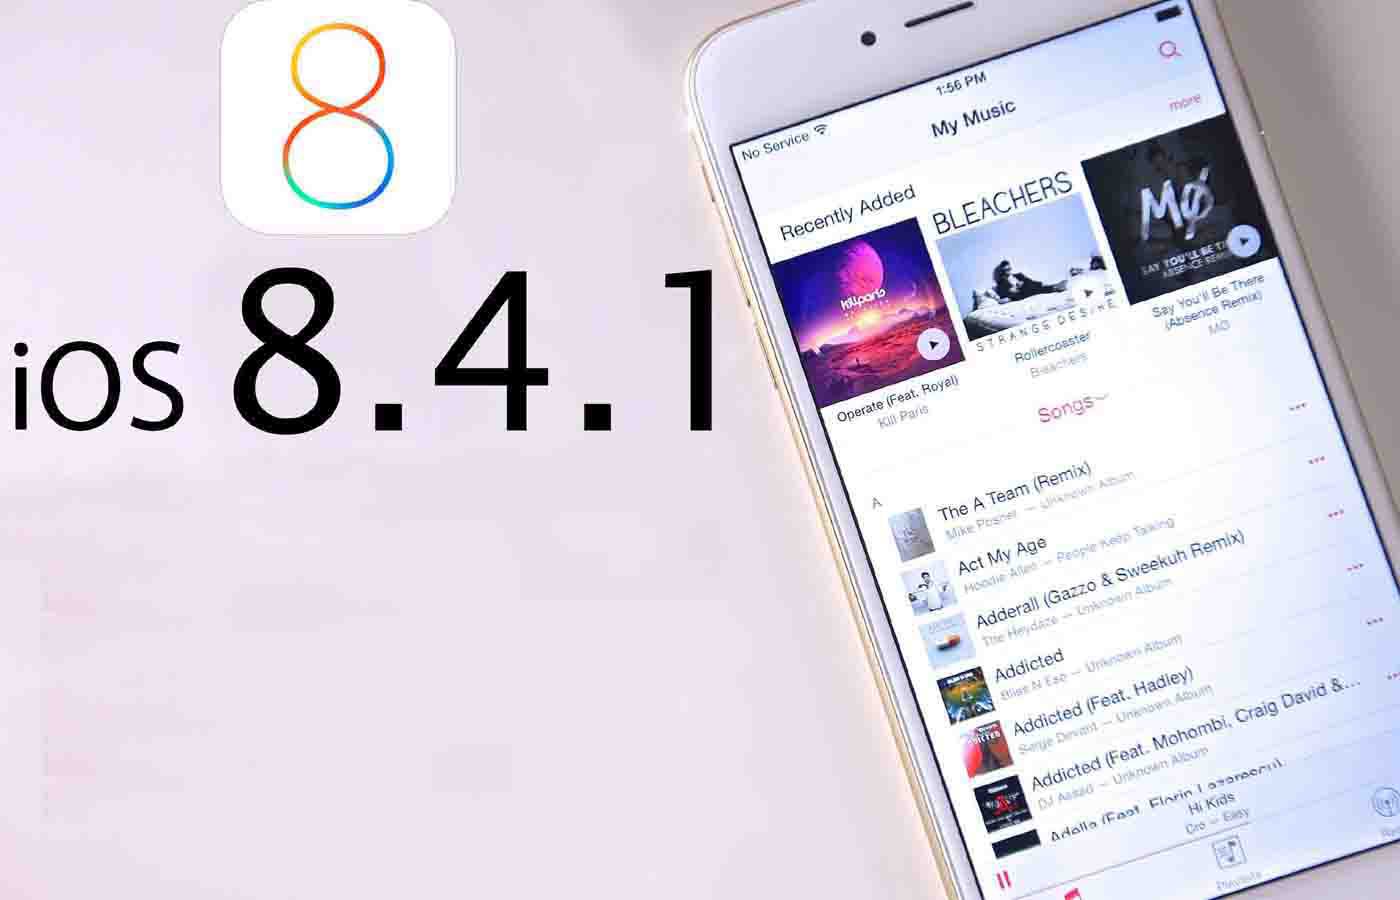 Pronto se lanzará Jailbreak iOS 8.4.1